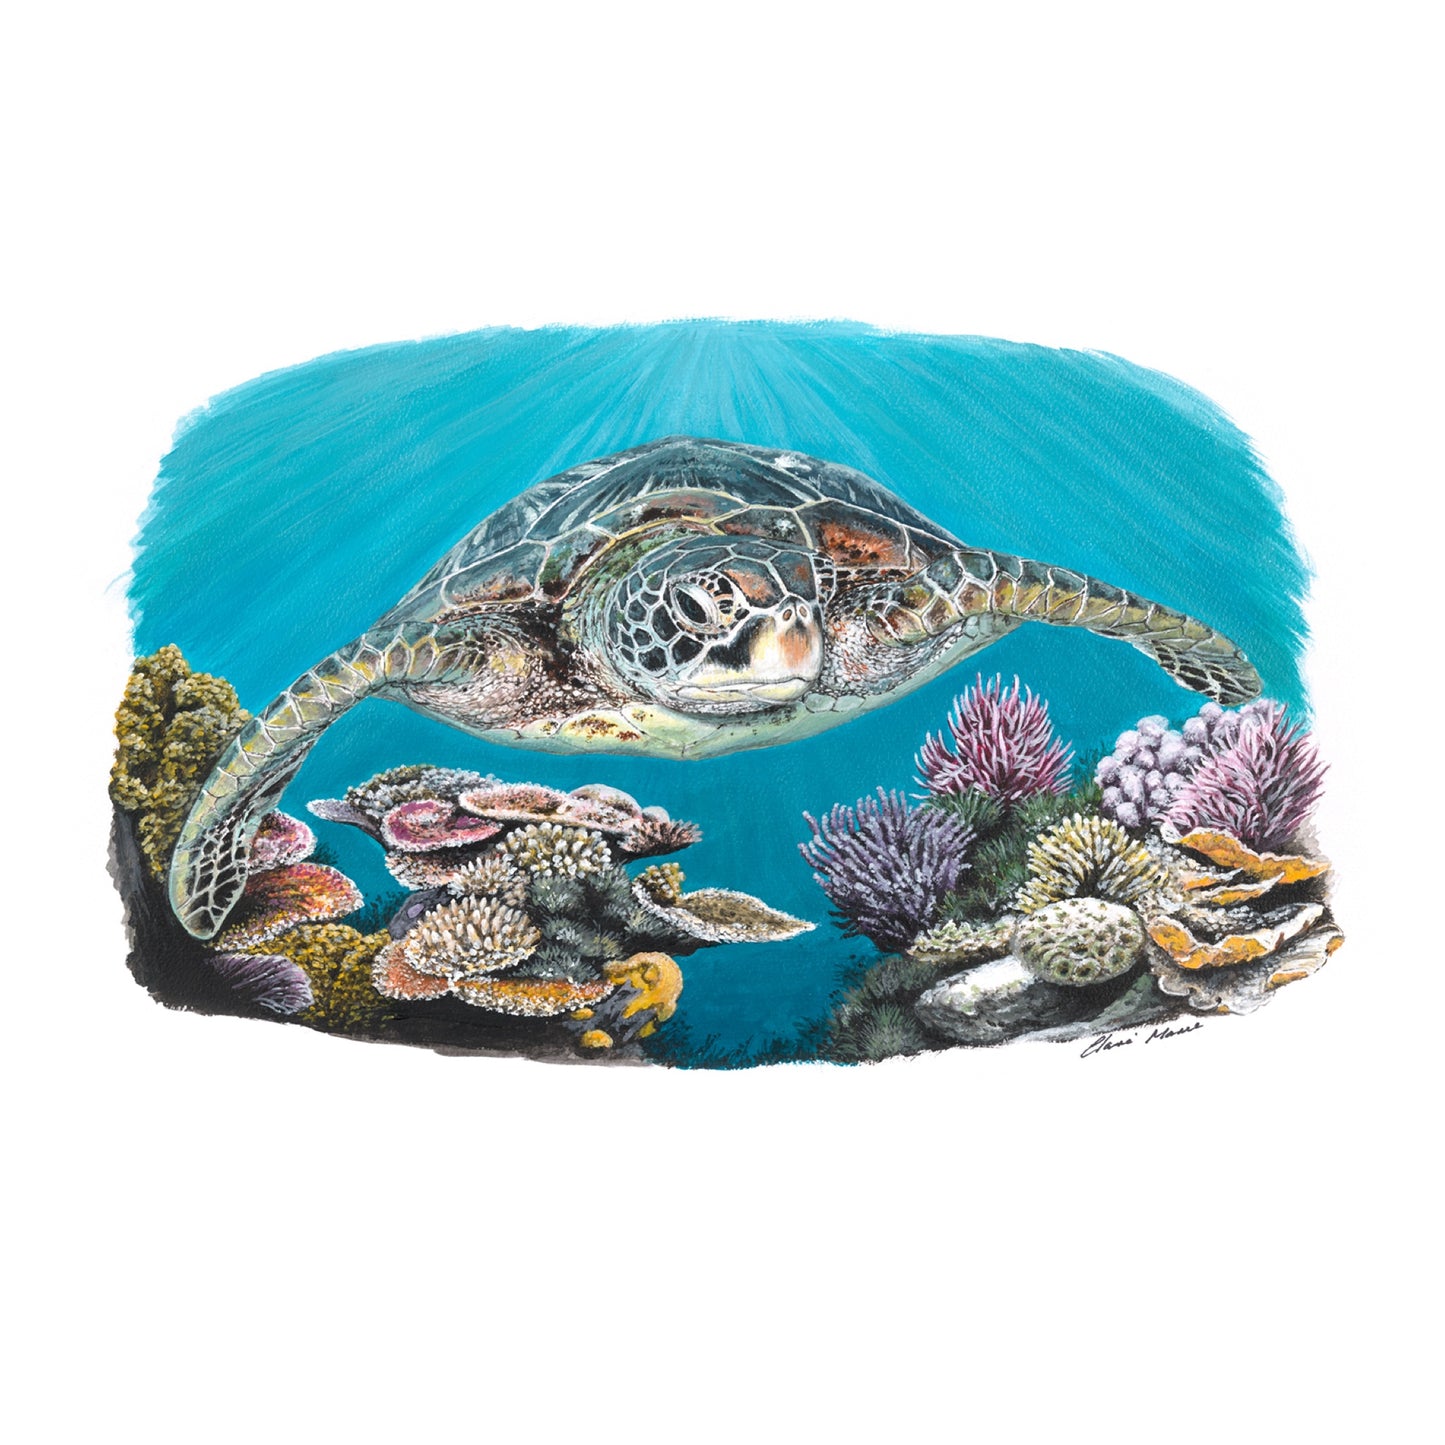 "Green turtle coral dreams" - limited edition A3 fine art print